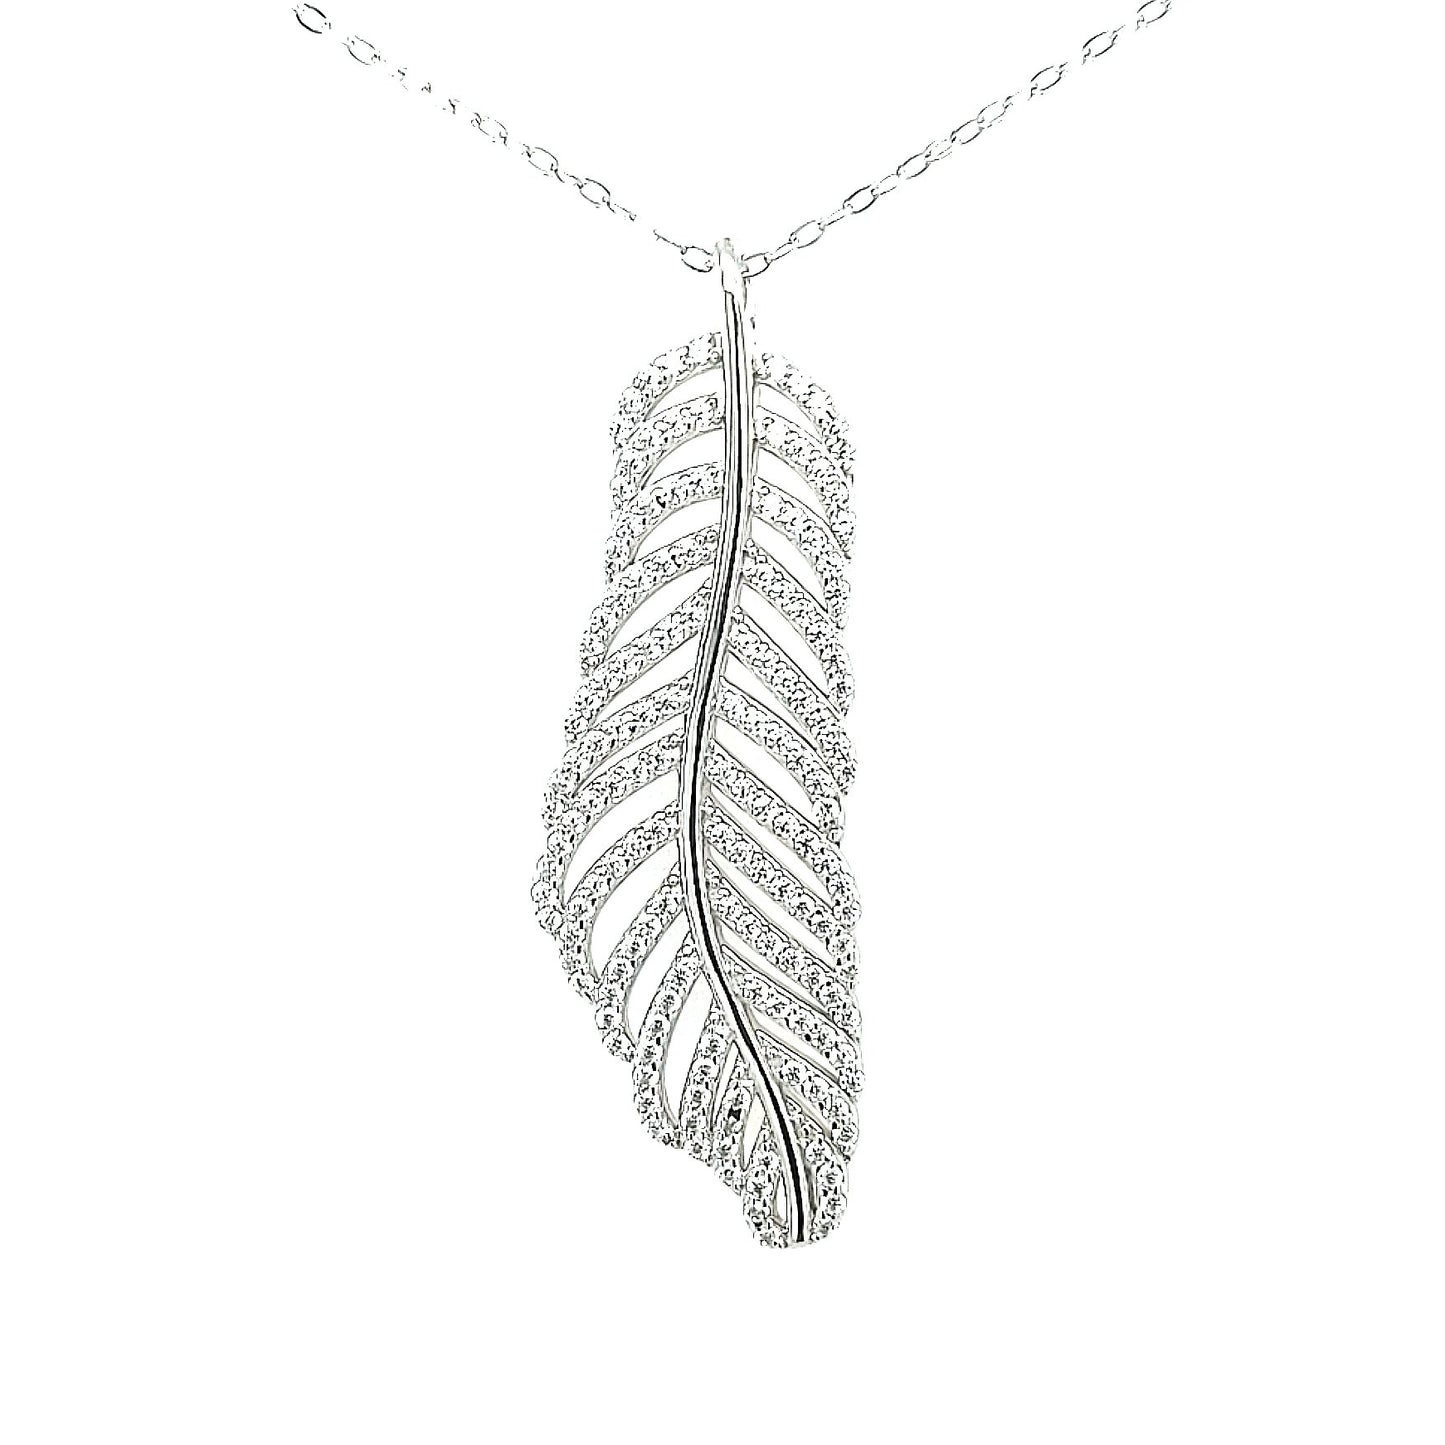 Sterling Silver CZ Leaf Necklace - HK Jewels